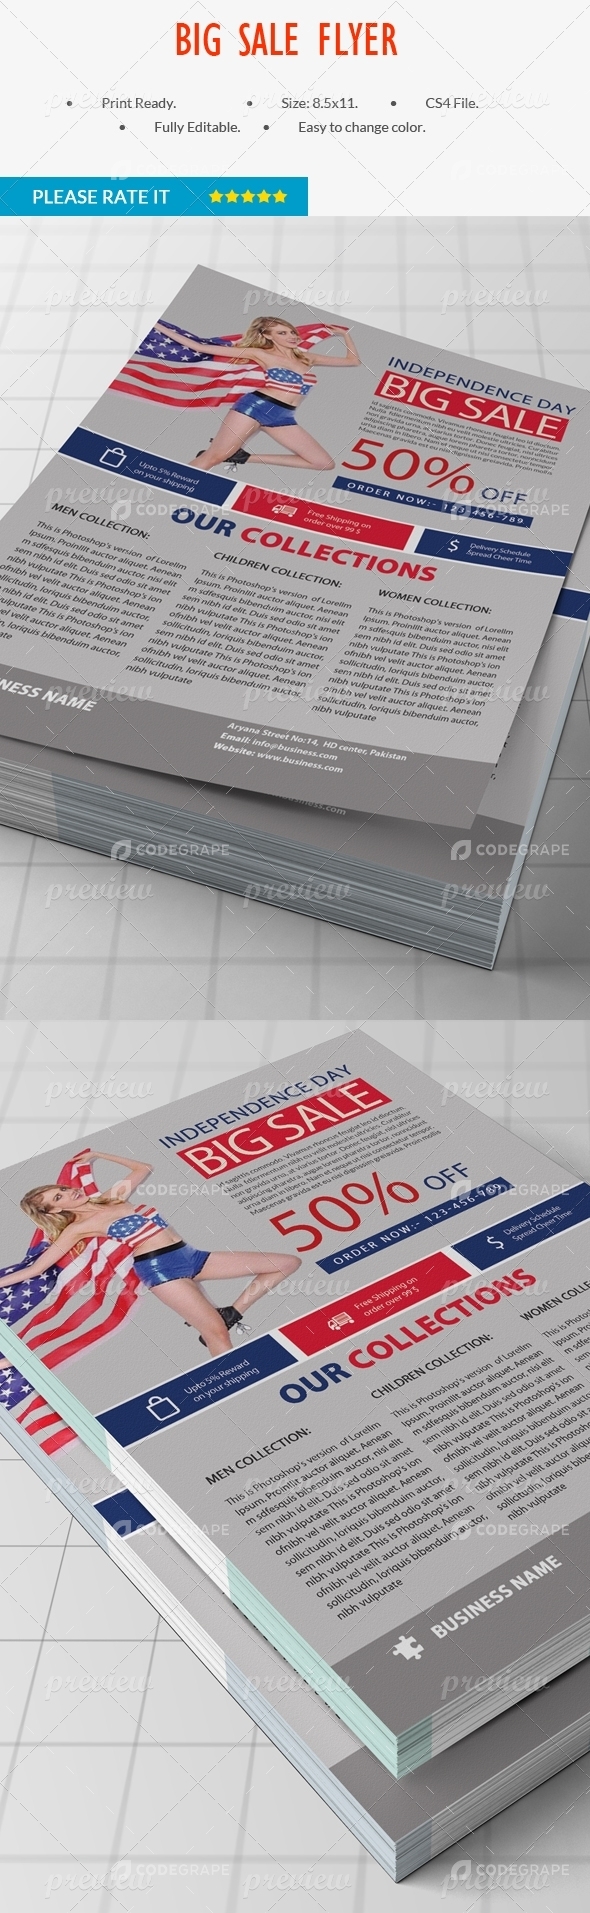 Independence Day Sale / BIG SALE Flyer